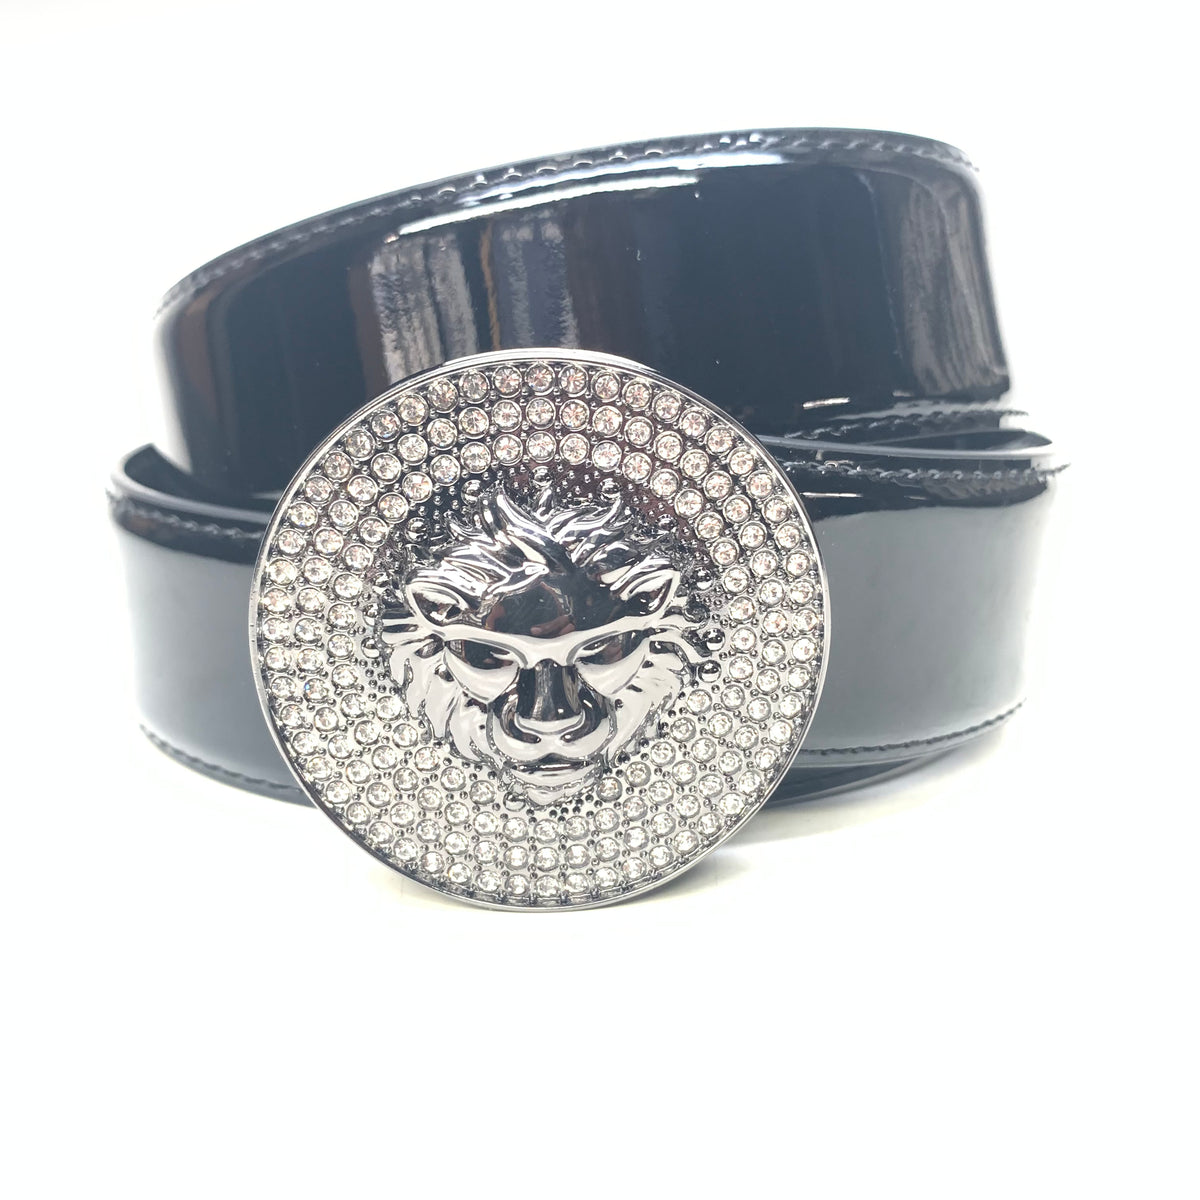 Barabas "Lion Guard" Shiny Black/Shiny Black Patent Adjustable Luxury Leather Dress Belt - Dudes Boutique